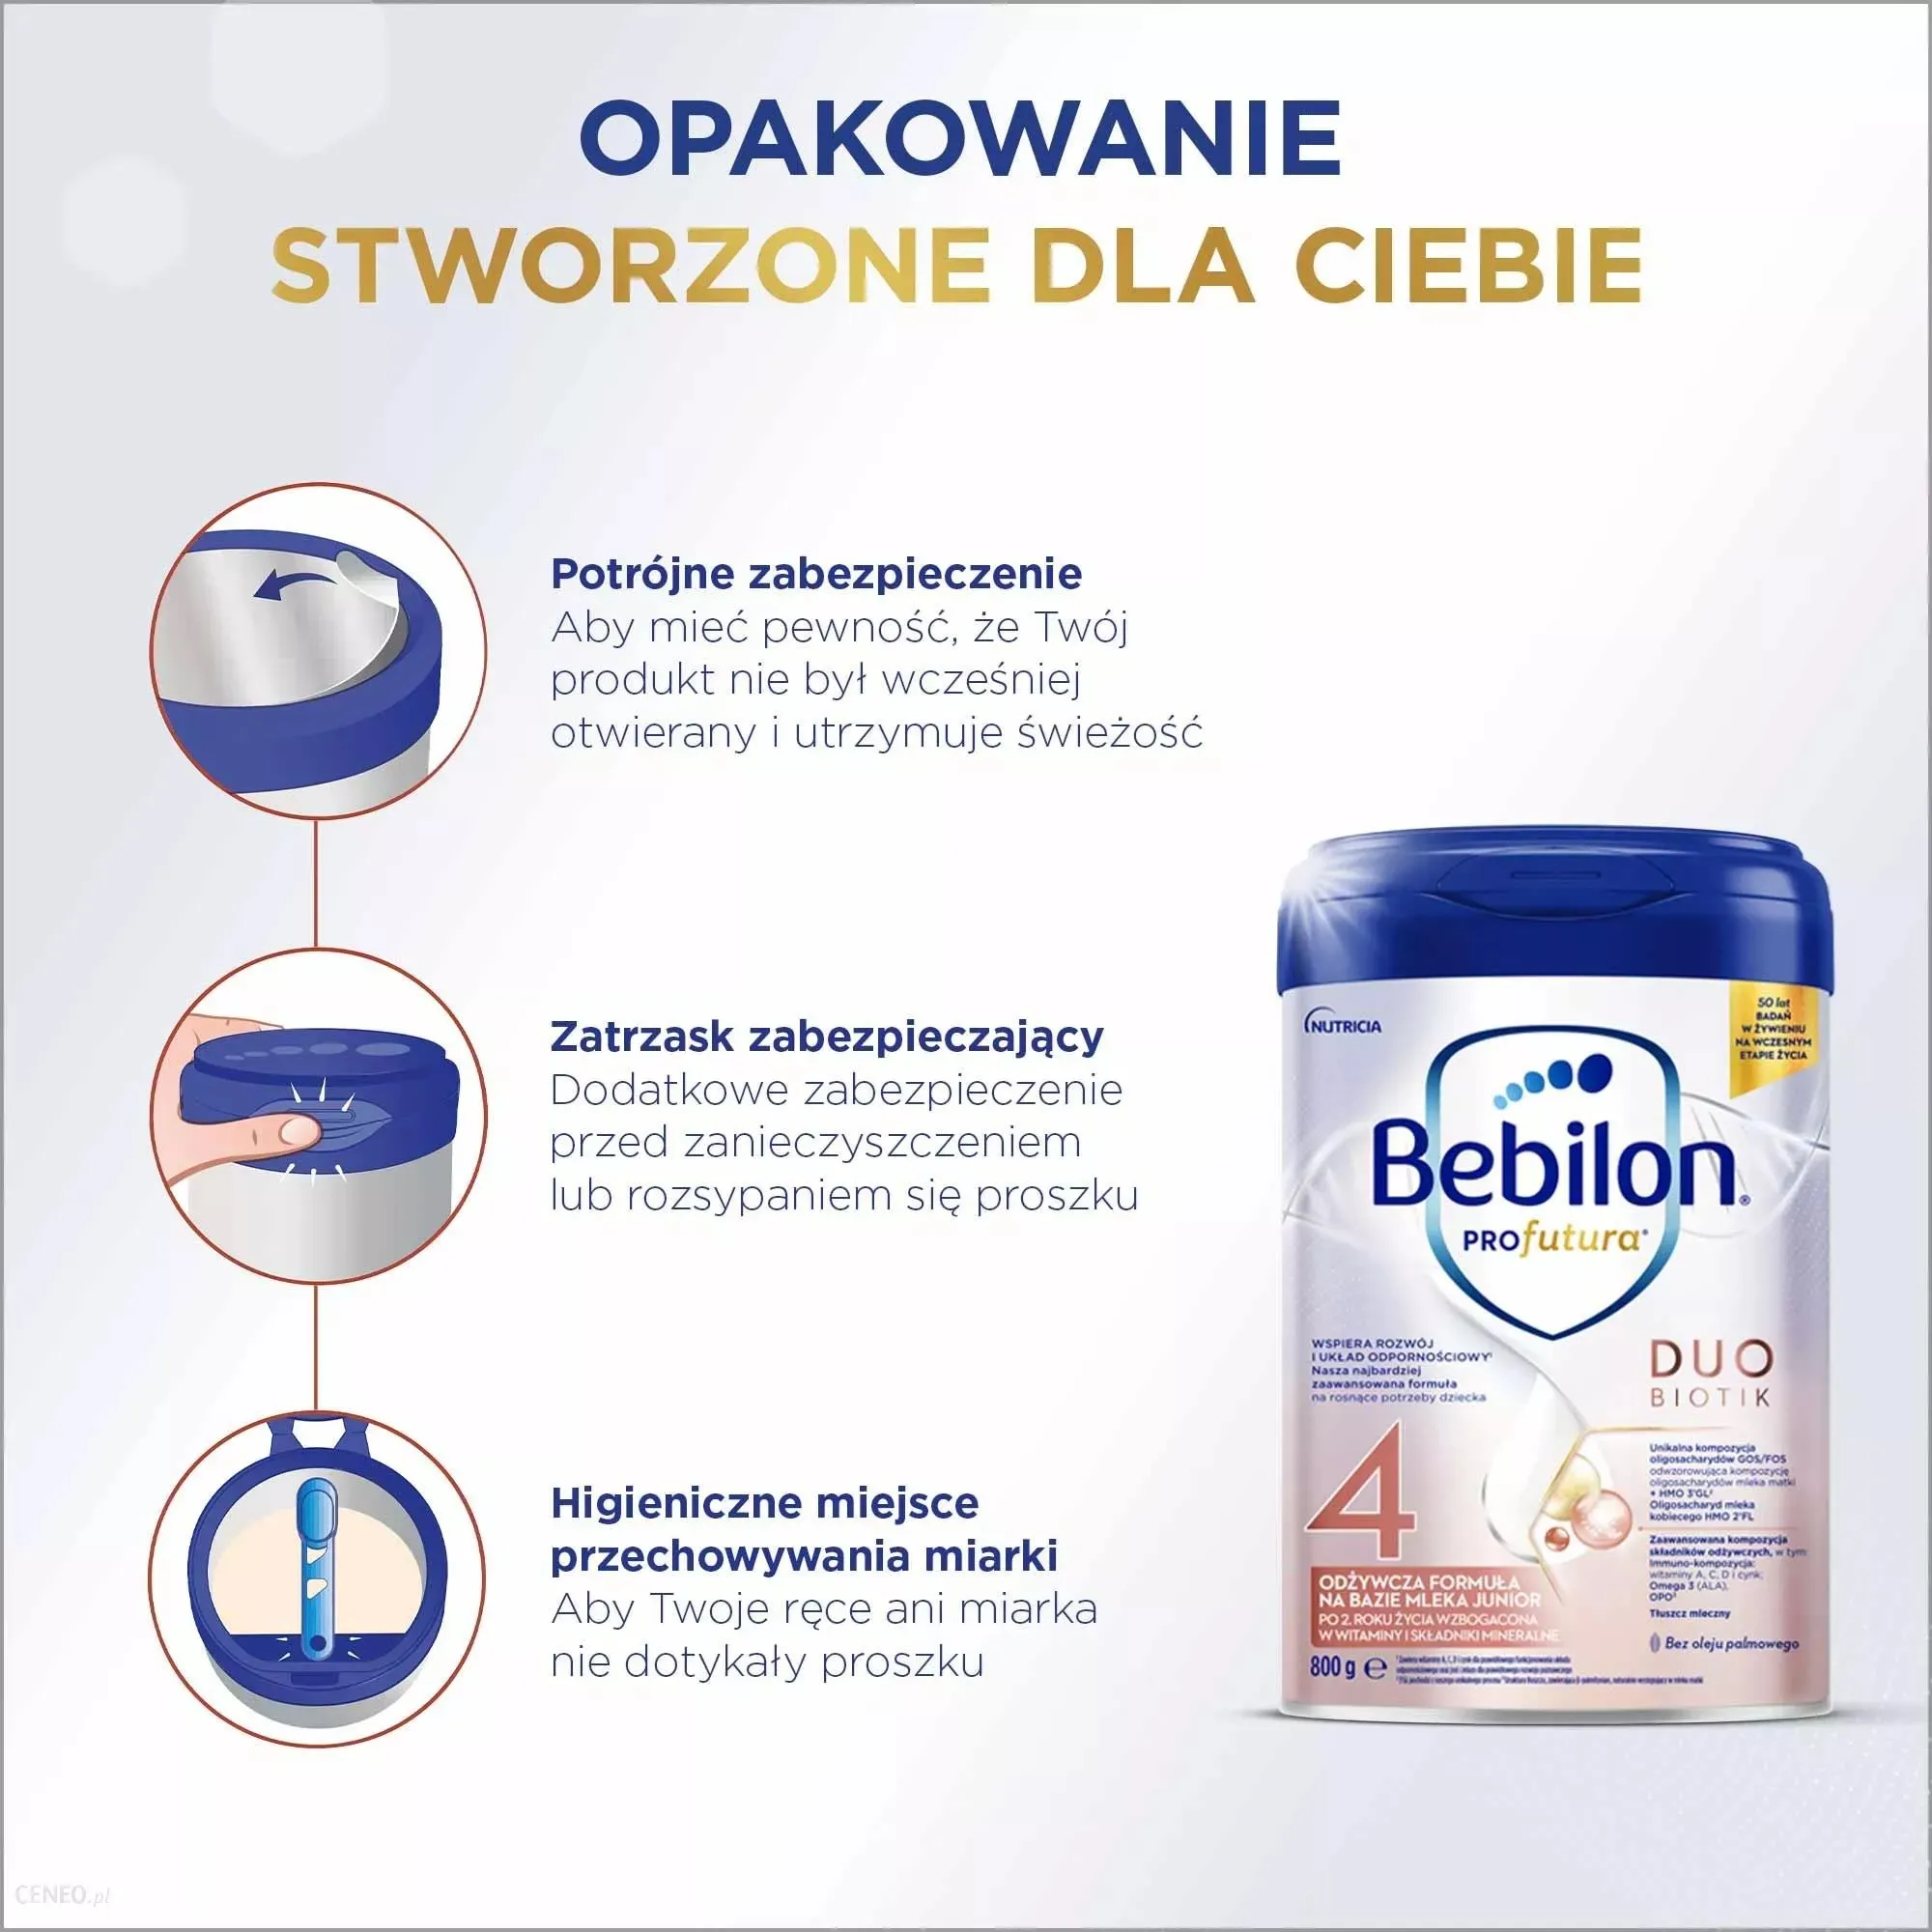 Bebilon Profutura Duo Biotik 4, mleko modyfikowane po 2. roku życia, 800 g 